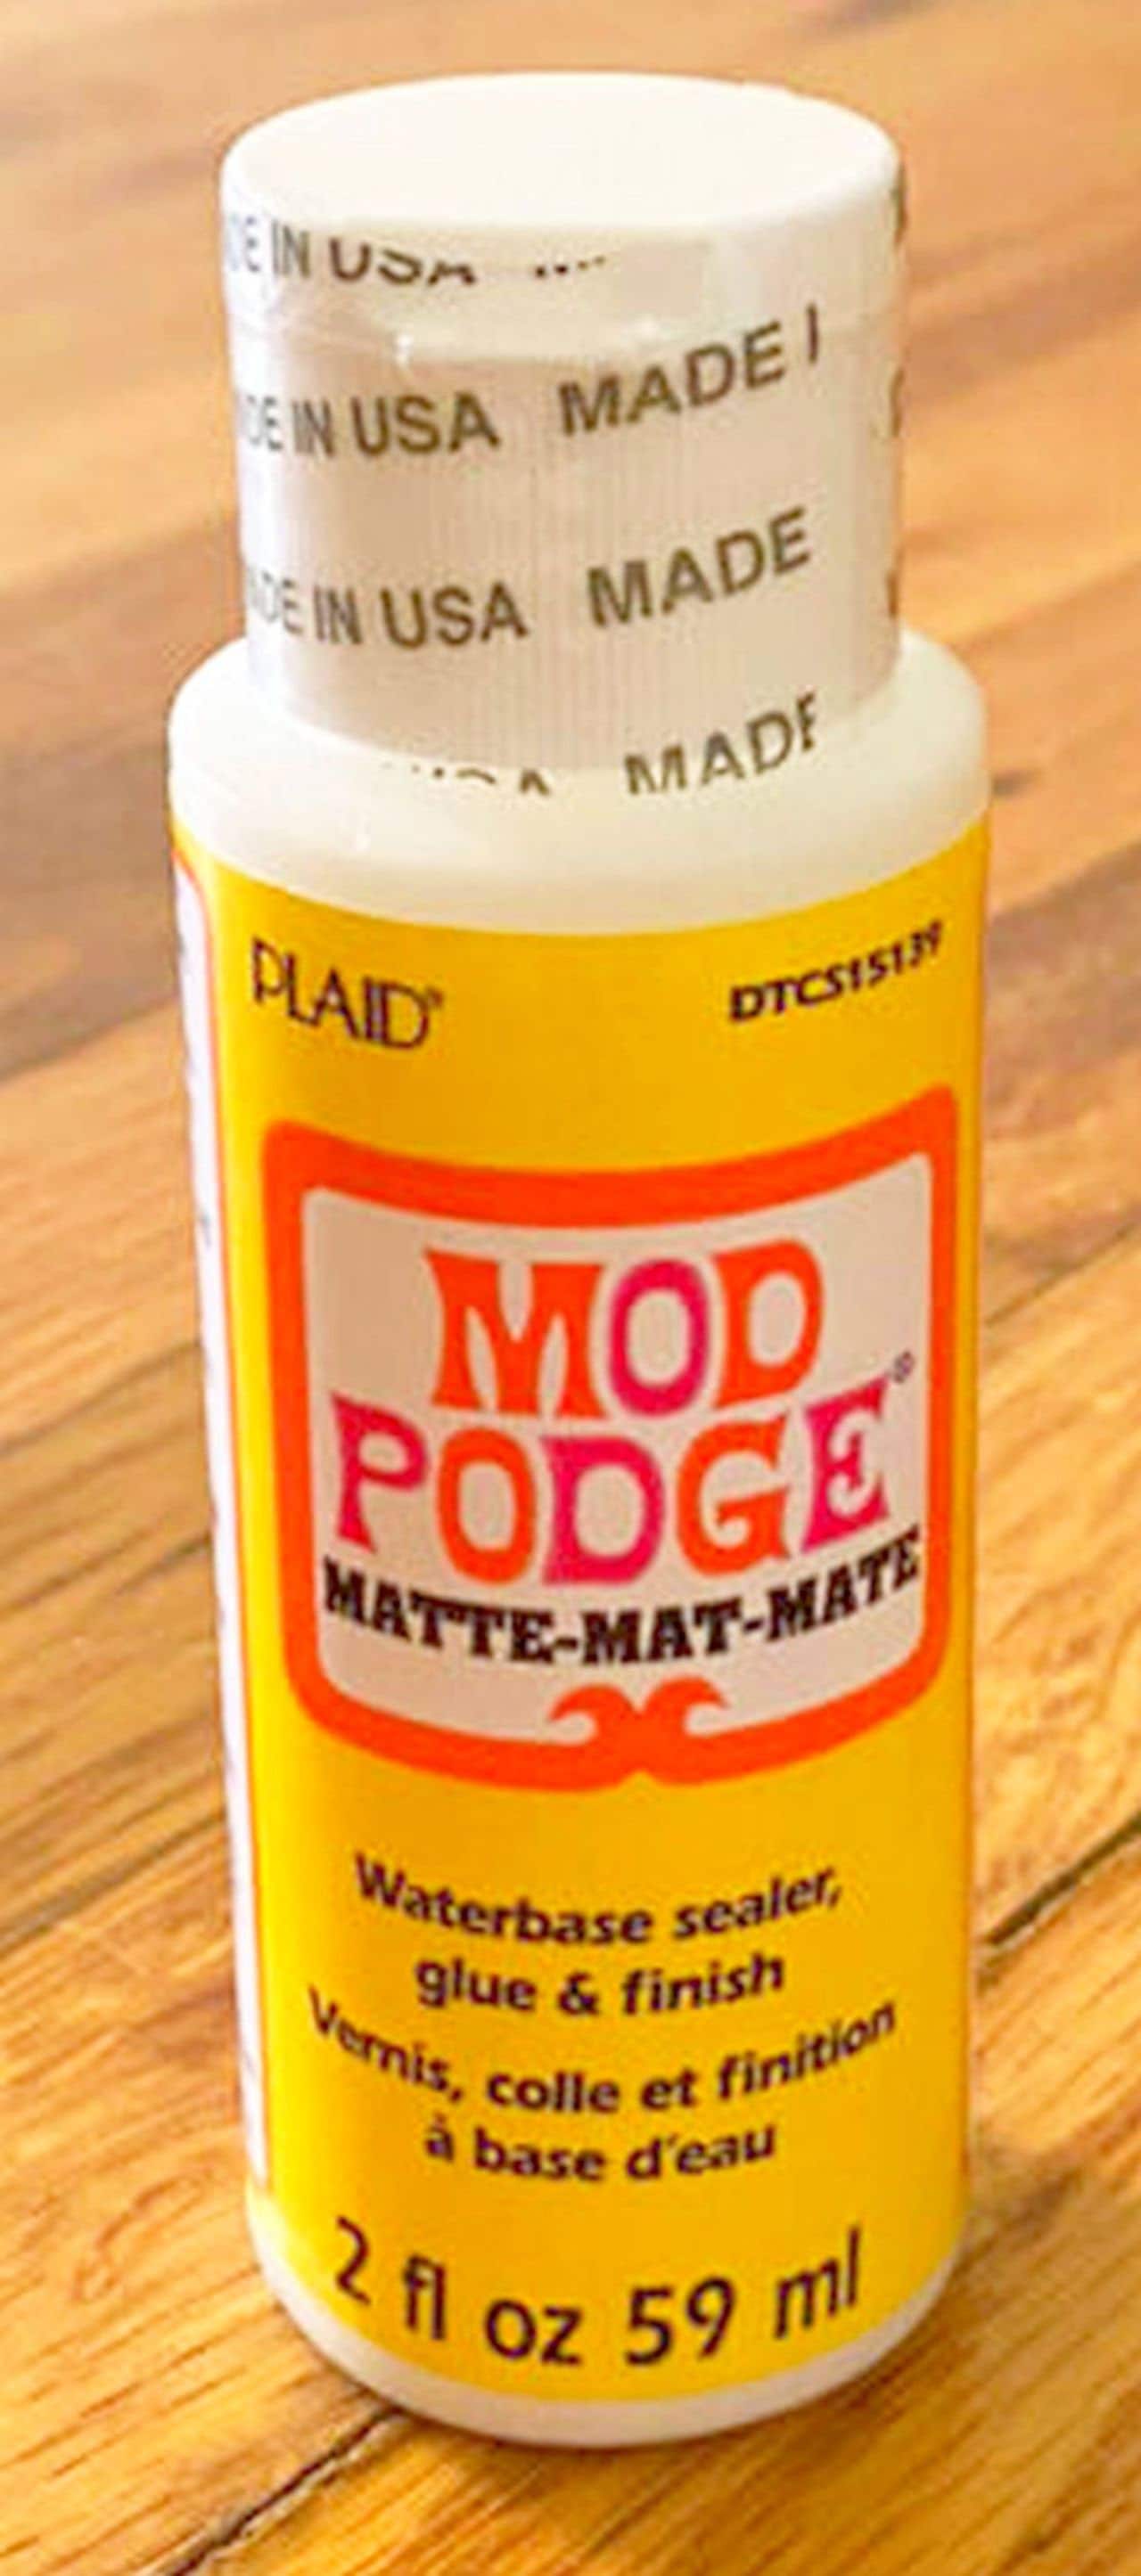 Mod Podge 2 ounce Decoupage Glue